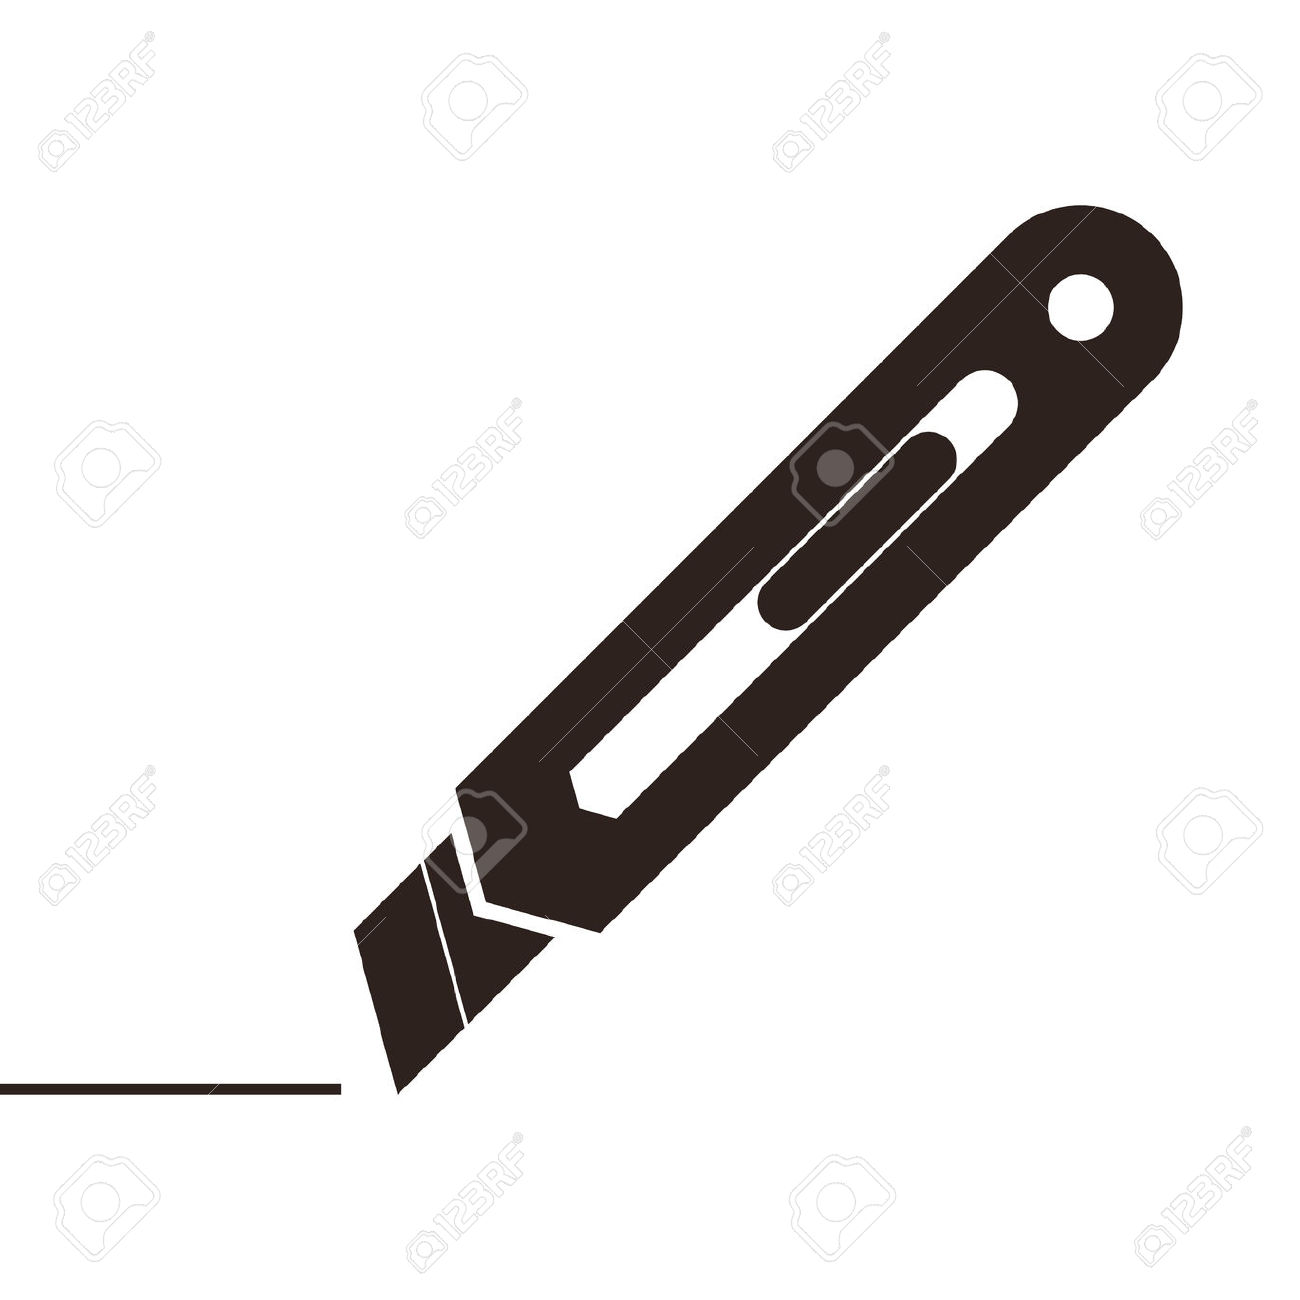 Utility Knife Sign Isolated On White Background Royalty Free.